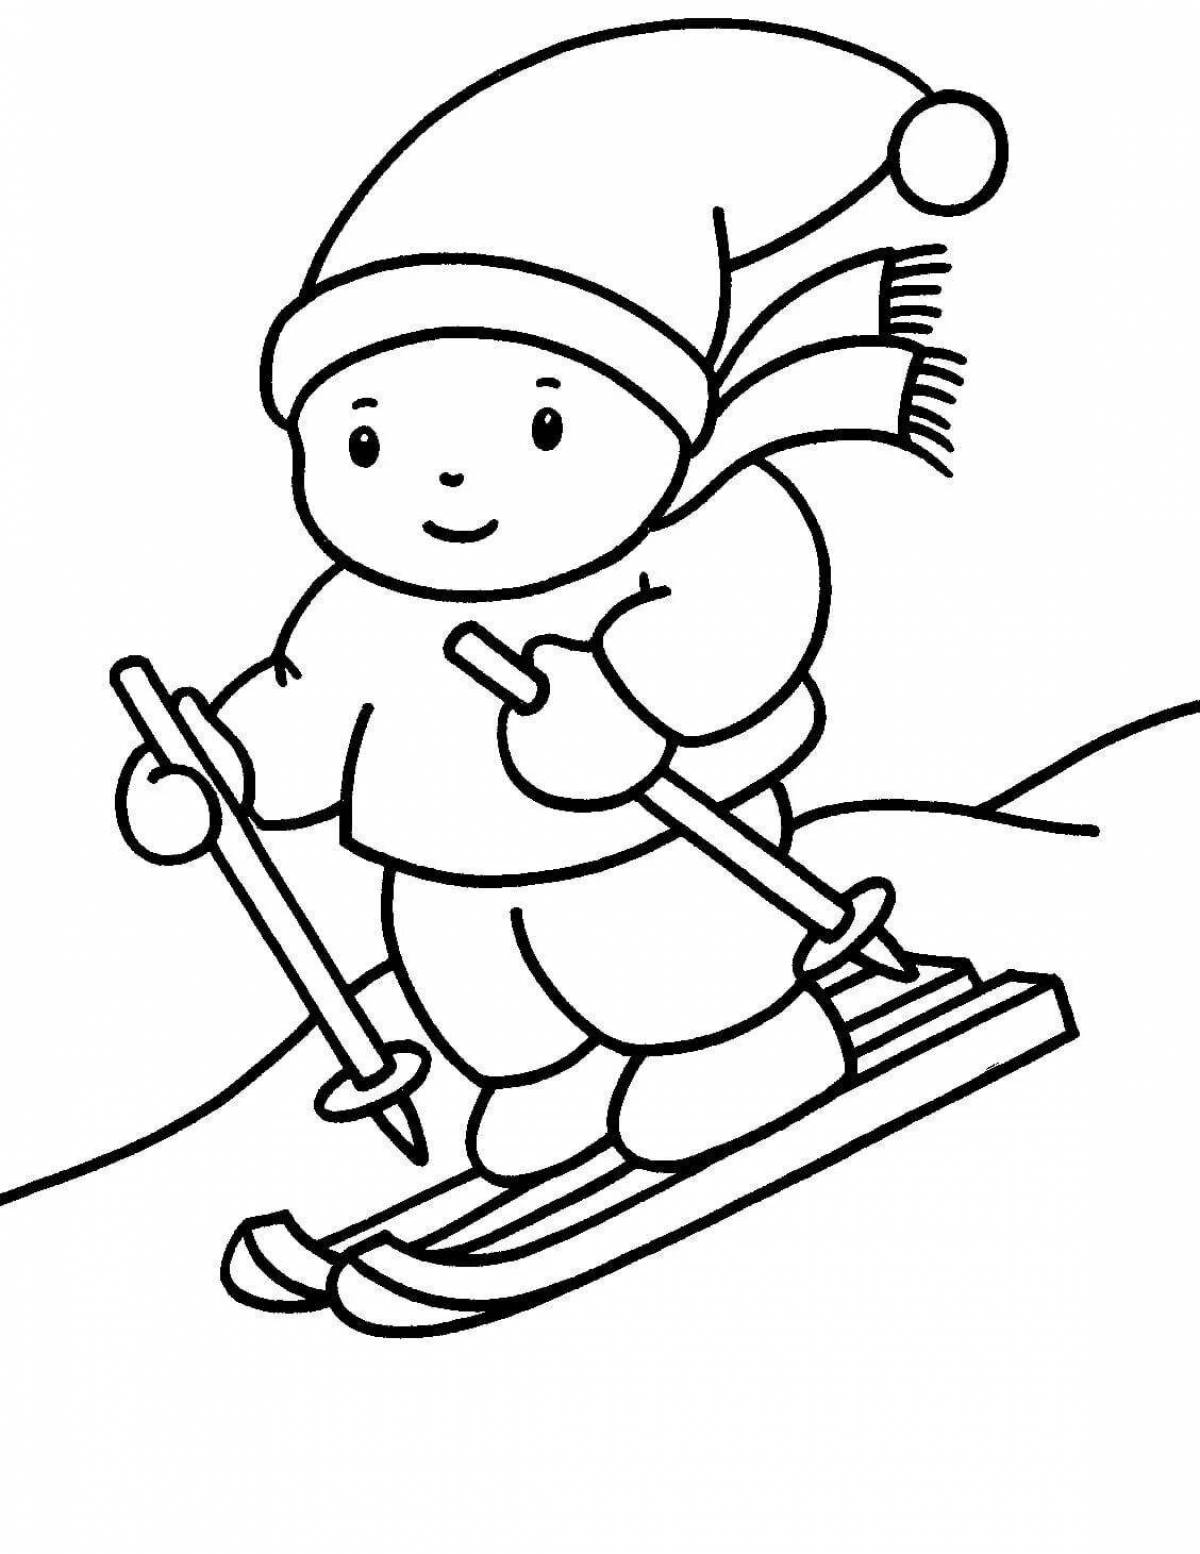 Coloring page stimulating boy skiing